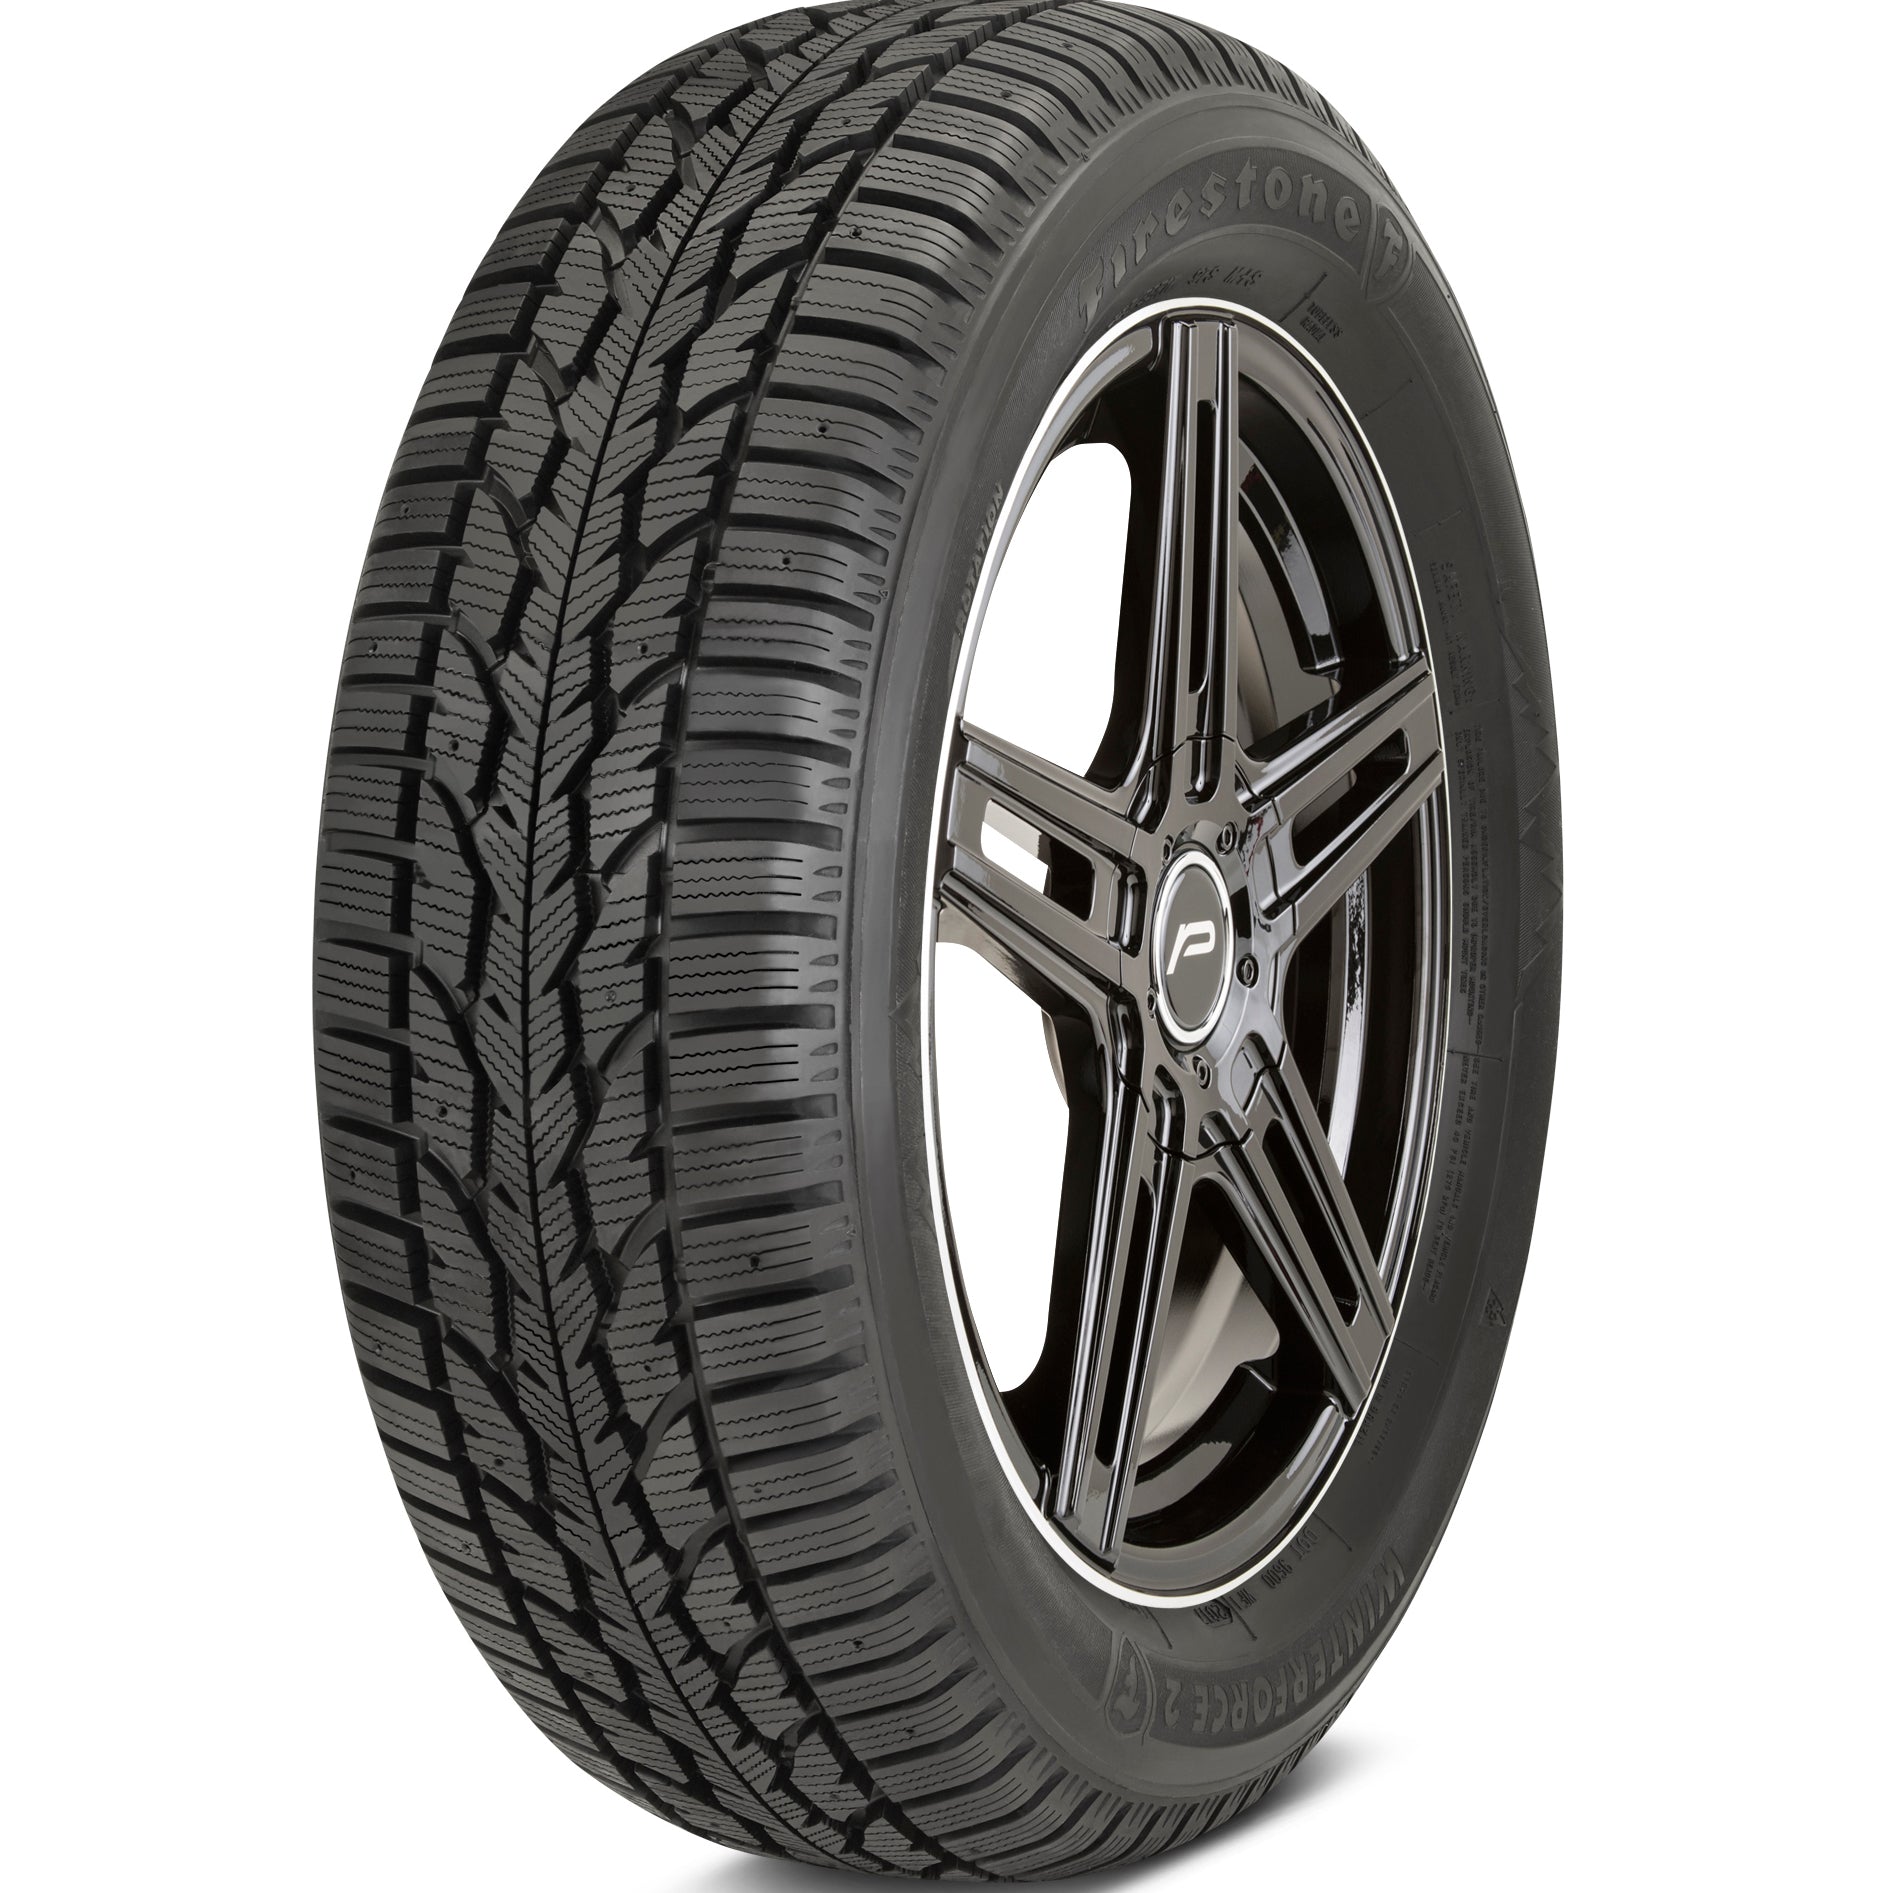 FIRESTONE WINTERFORCE2 205/50R17 (25.1X8.1R 17) Tires